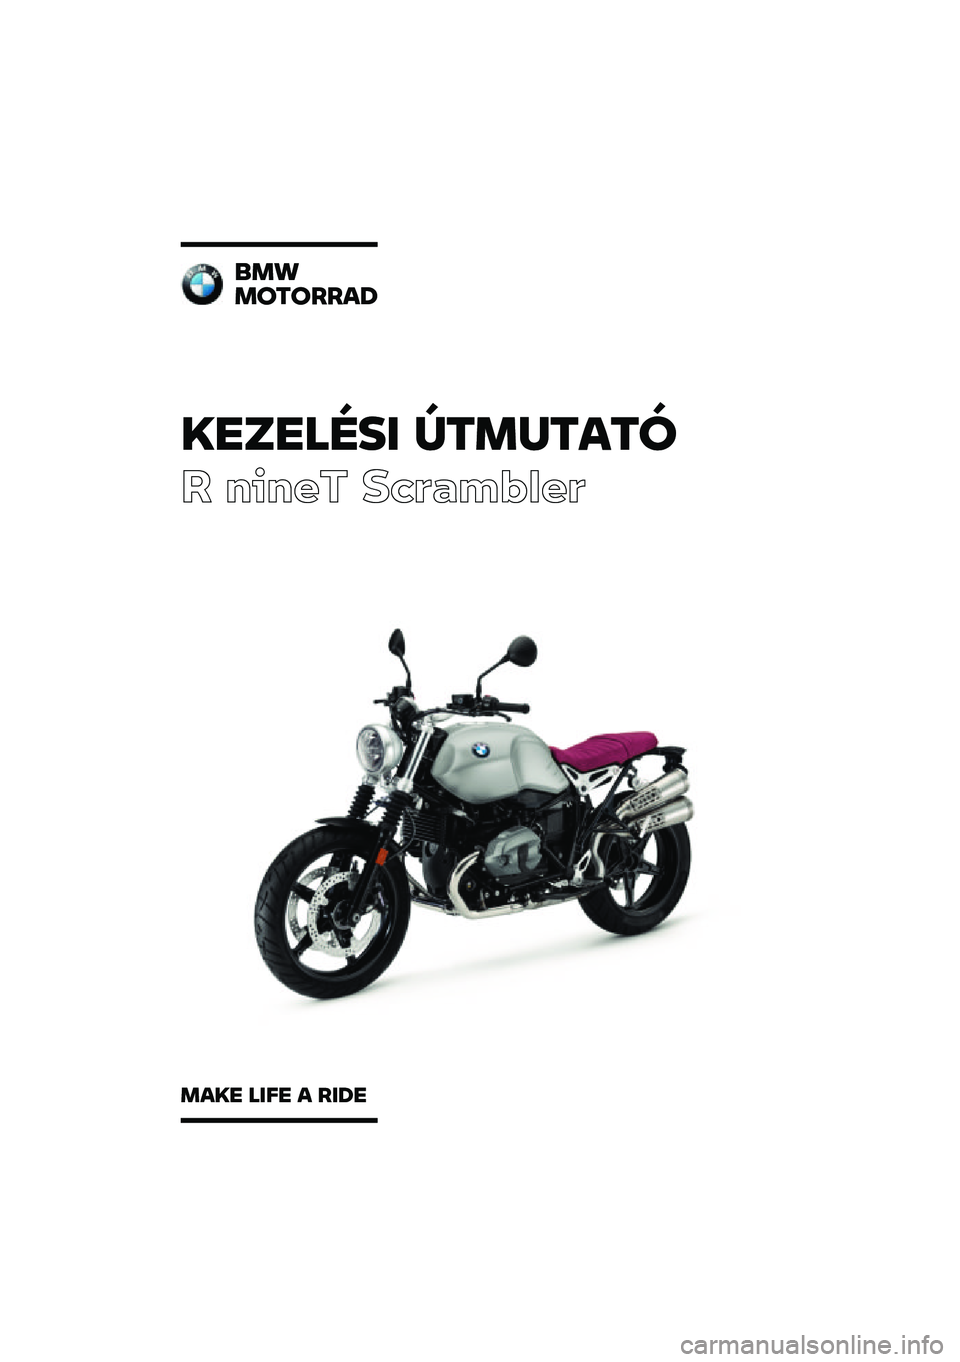 BMW MOTORRAD R NINE T SCRAMBLER 2020  Kezelési útmutató (in Hungarian) �������\b�	 �
�\f�
��\f��\f�
� ����� ��\b�	�
��\f�
��	
��
�
�
��\f�����
�
��� ��	�� � ��	�� 